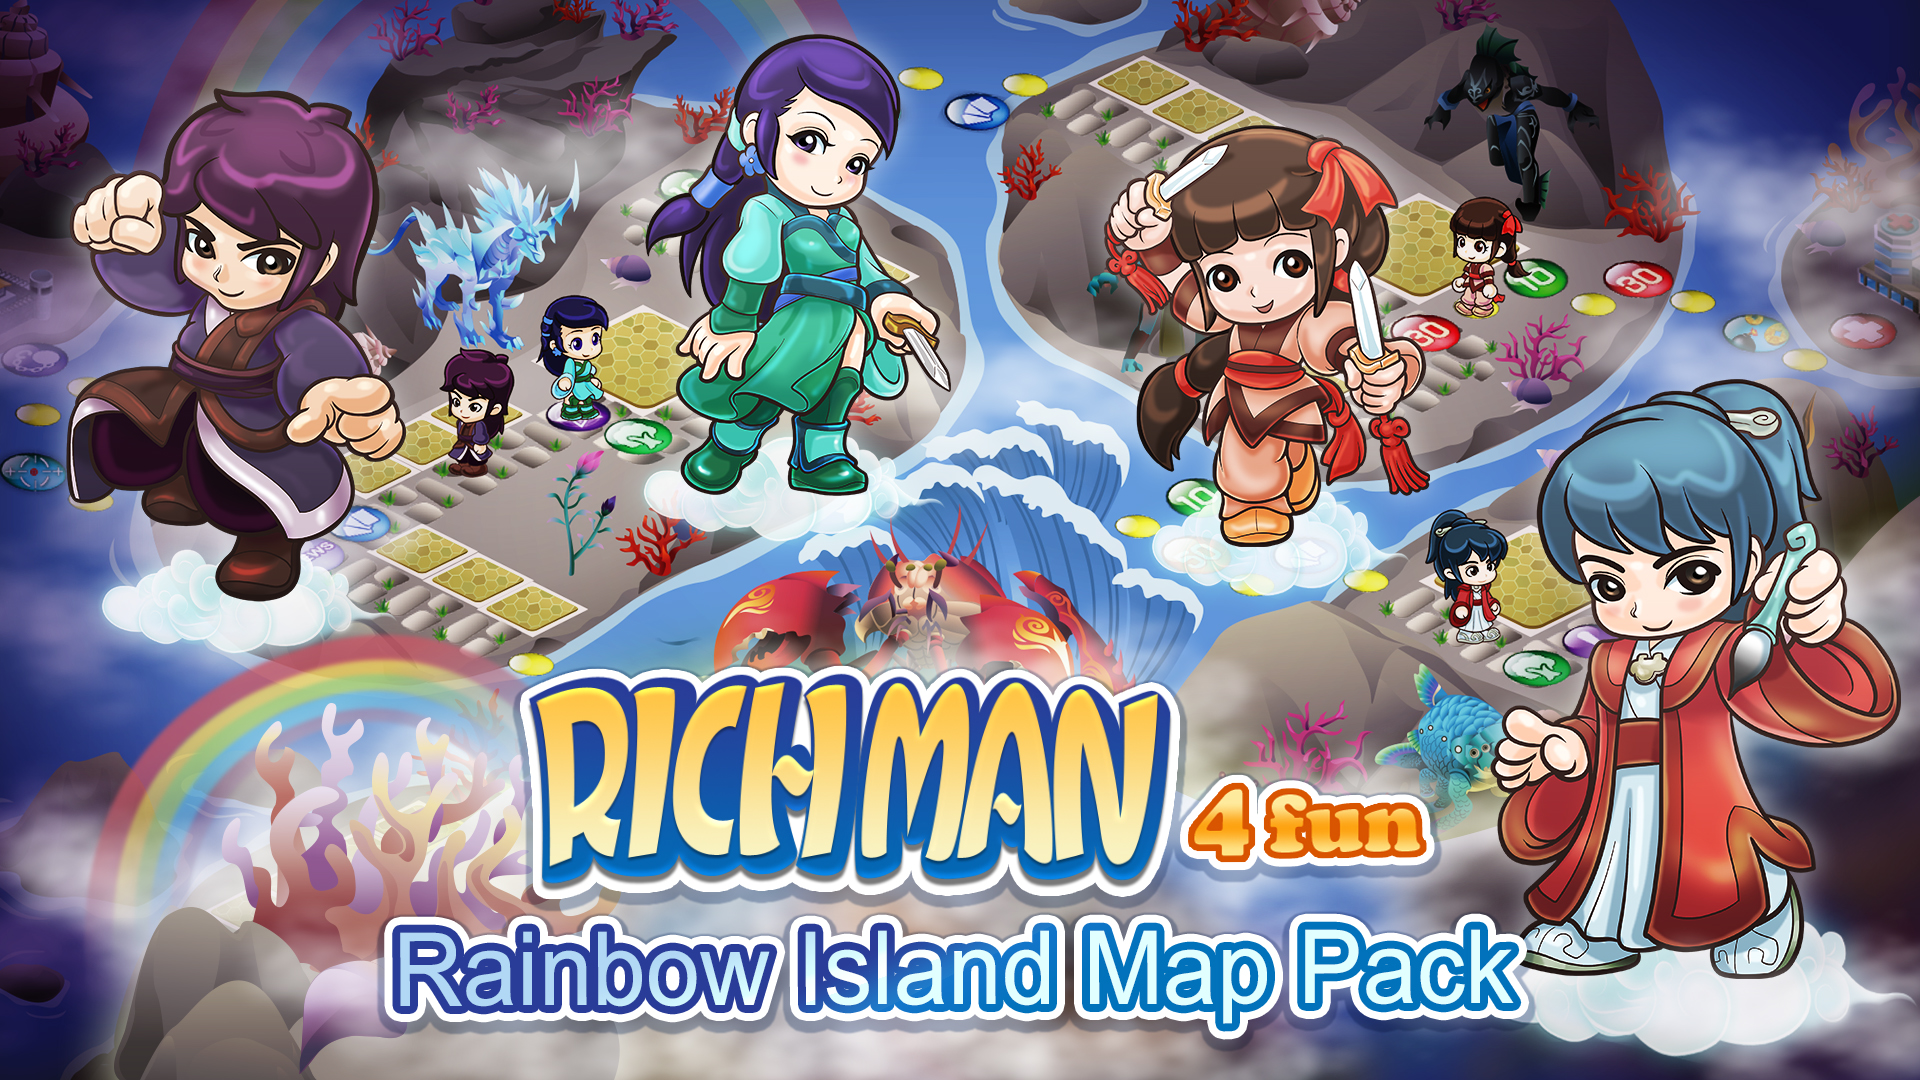 Rainbow Island Map Pack